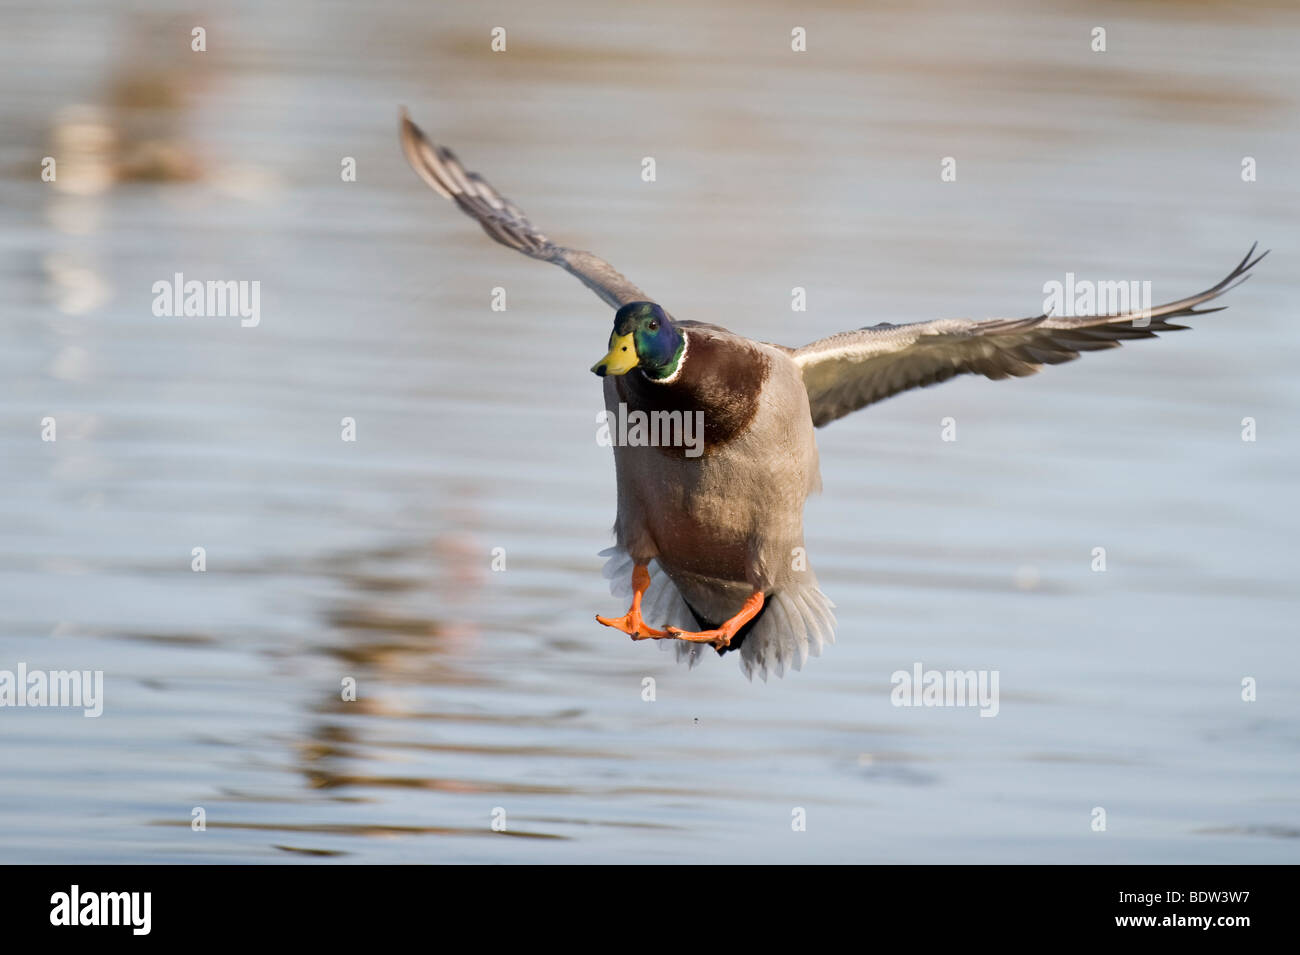 A duck in landing approach Stock Photo